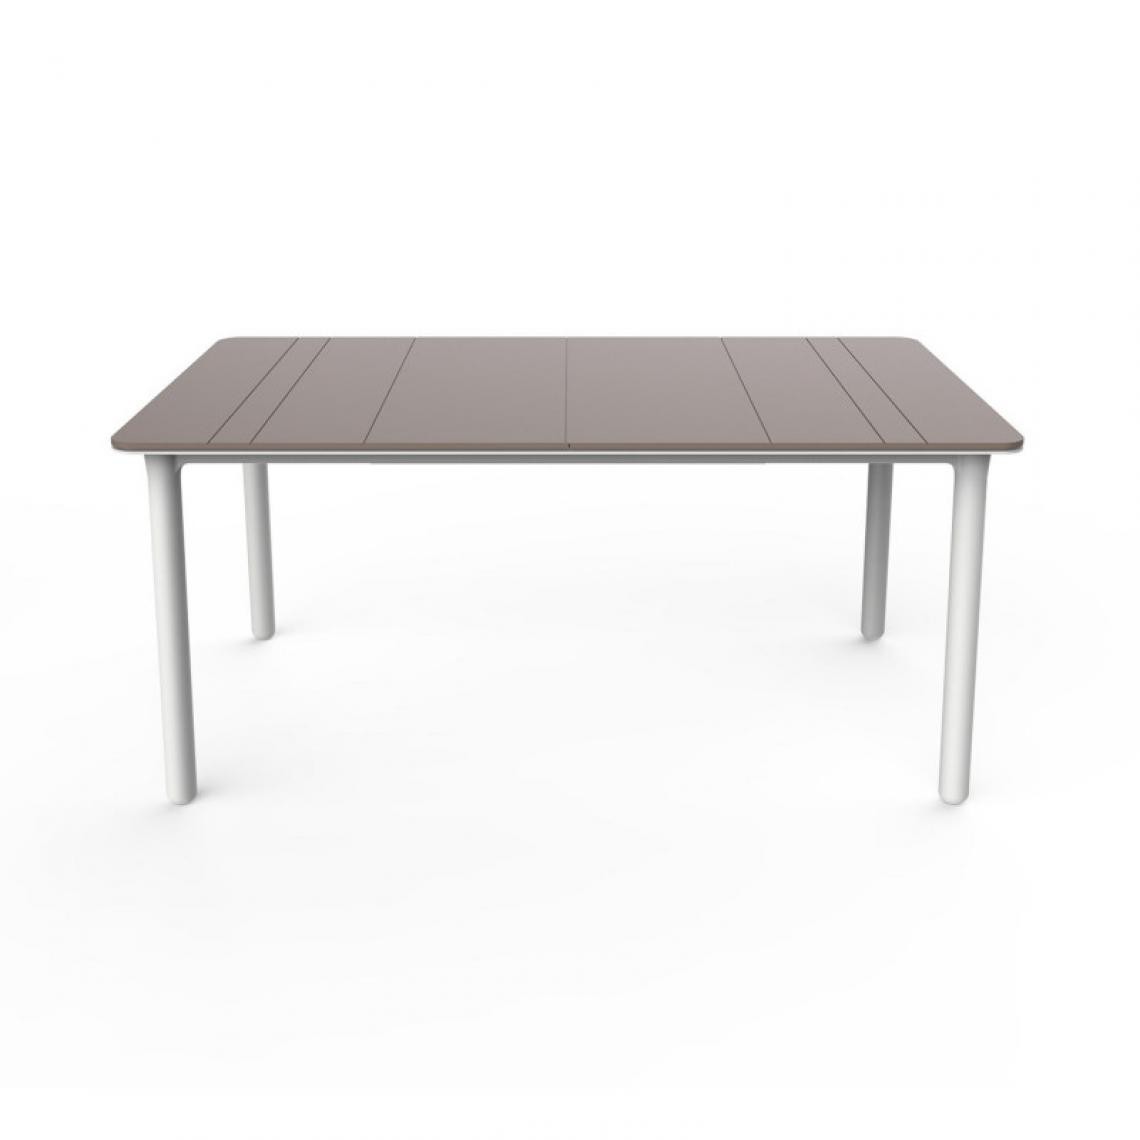 Resol - Table Noa 160x90 - RESOL - Sable-BlancFibre de verre, Polypropylène - Tables à manger